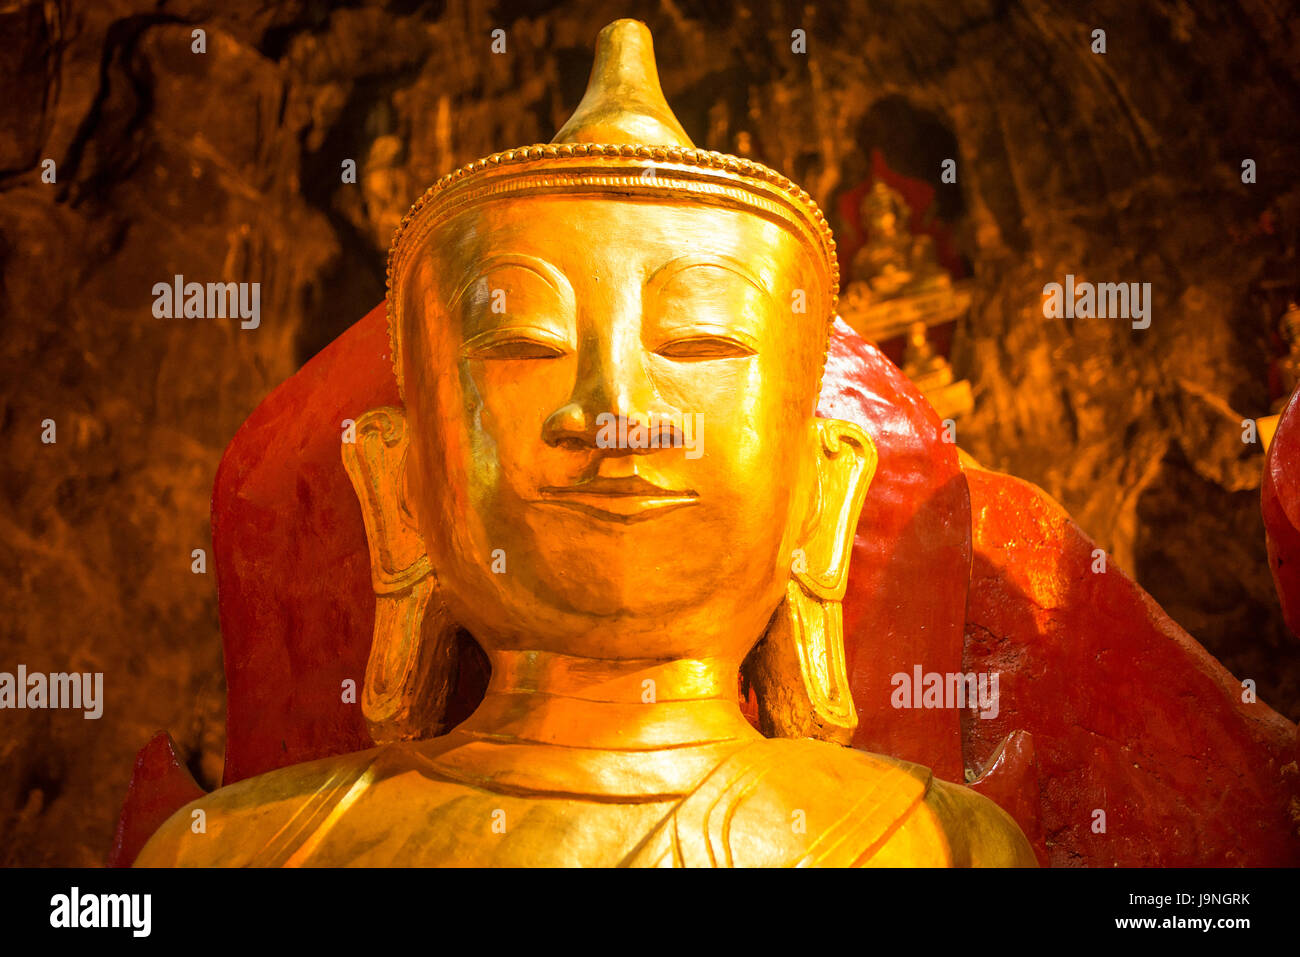 A statue of Buddha in Pindaya Cave, Myanmar. Stock Photo